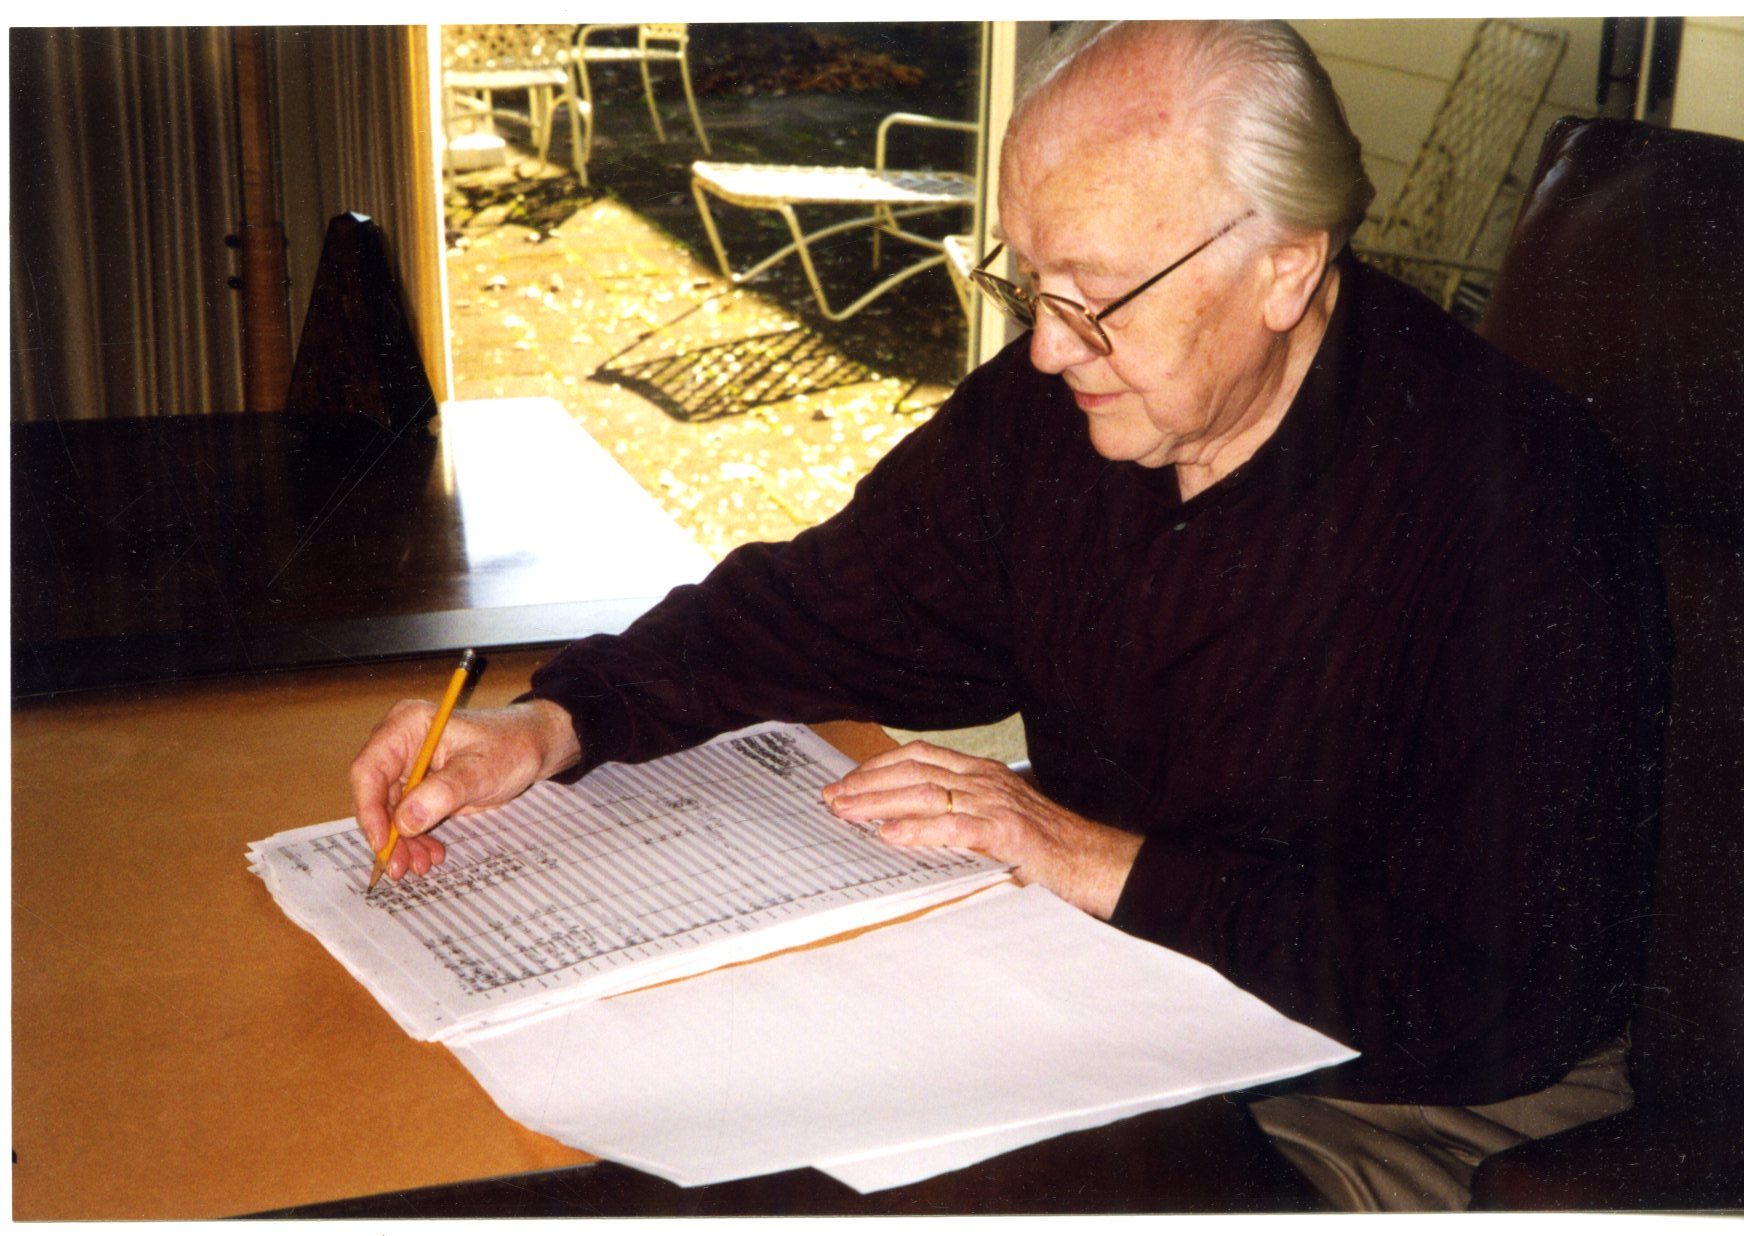 Karel Husa, composing at home.